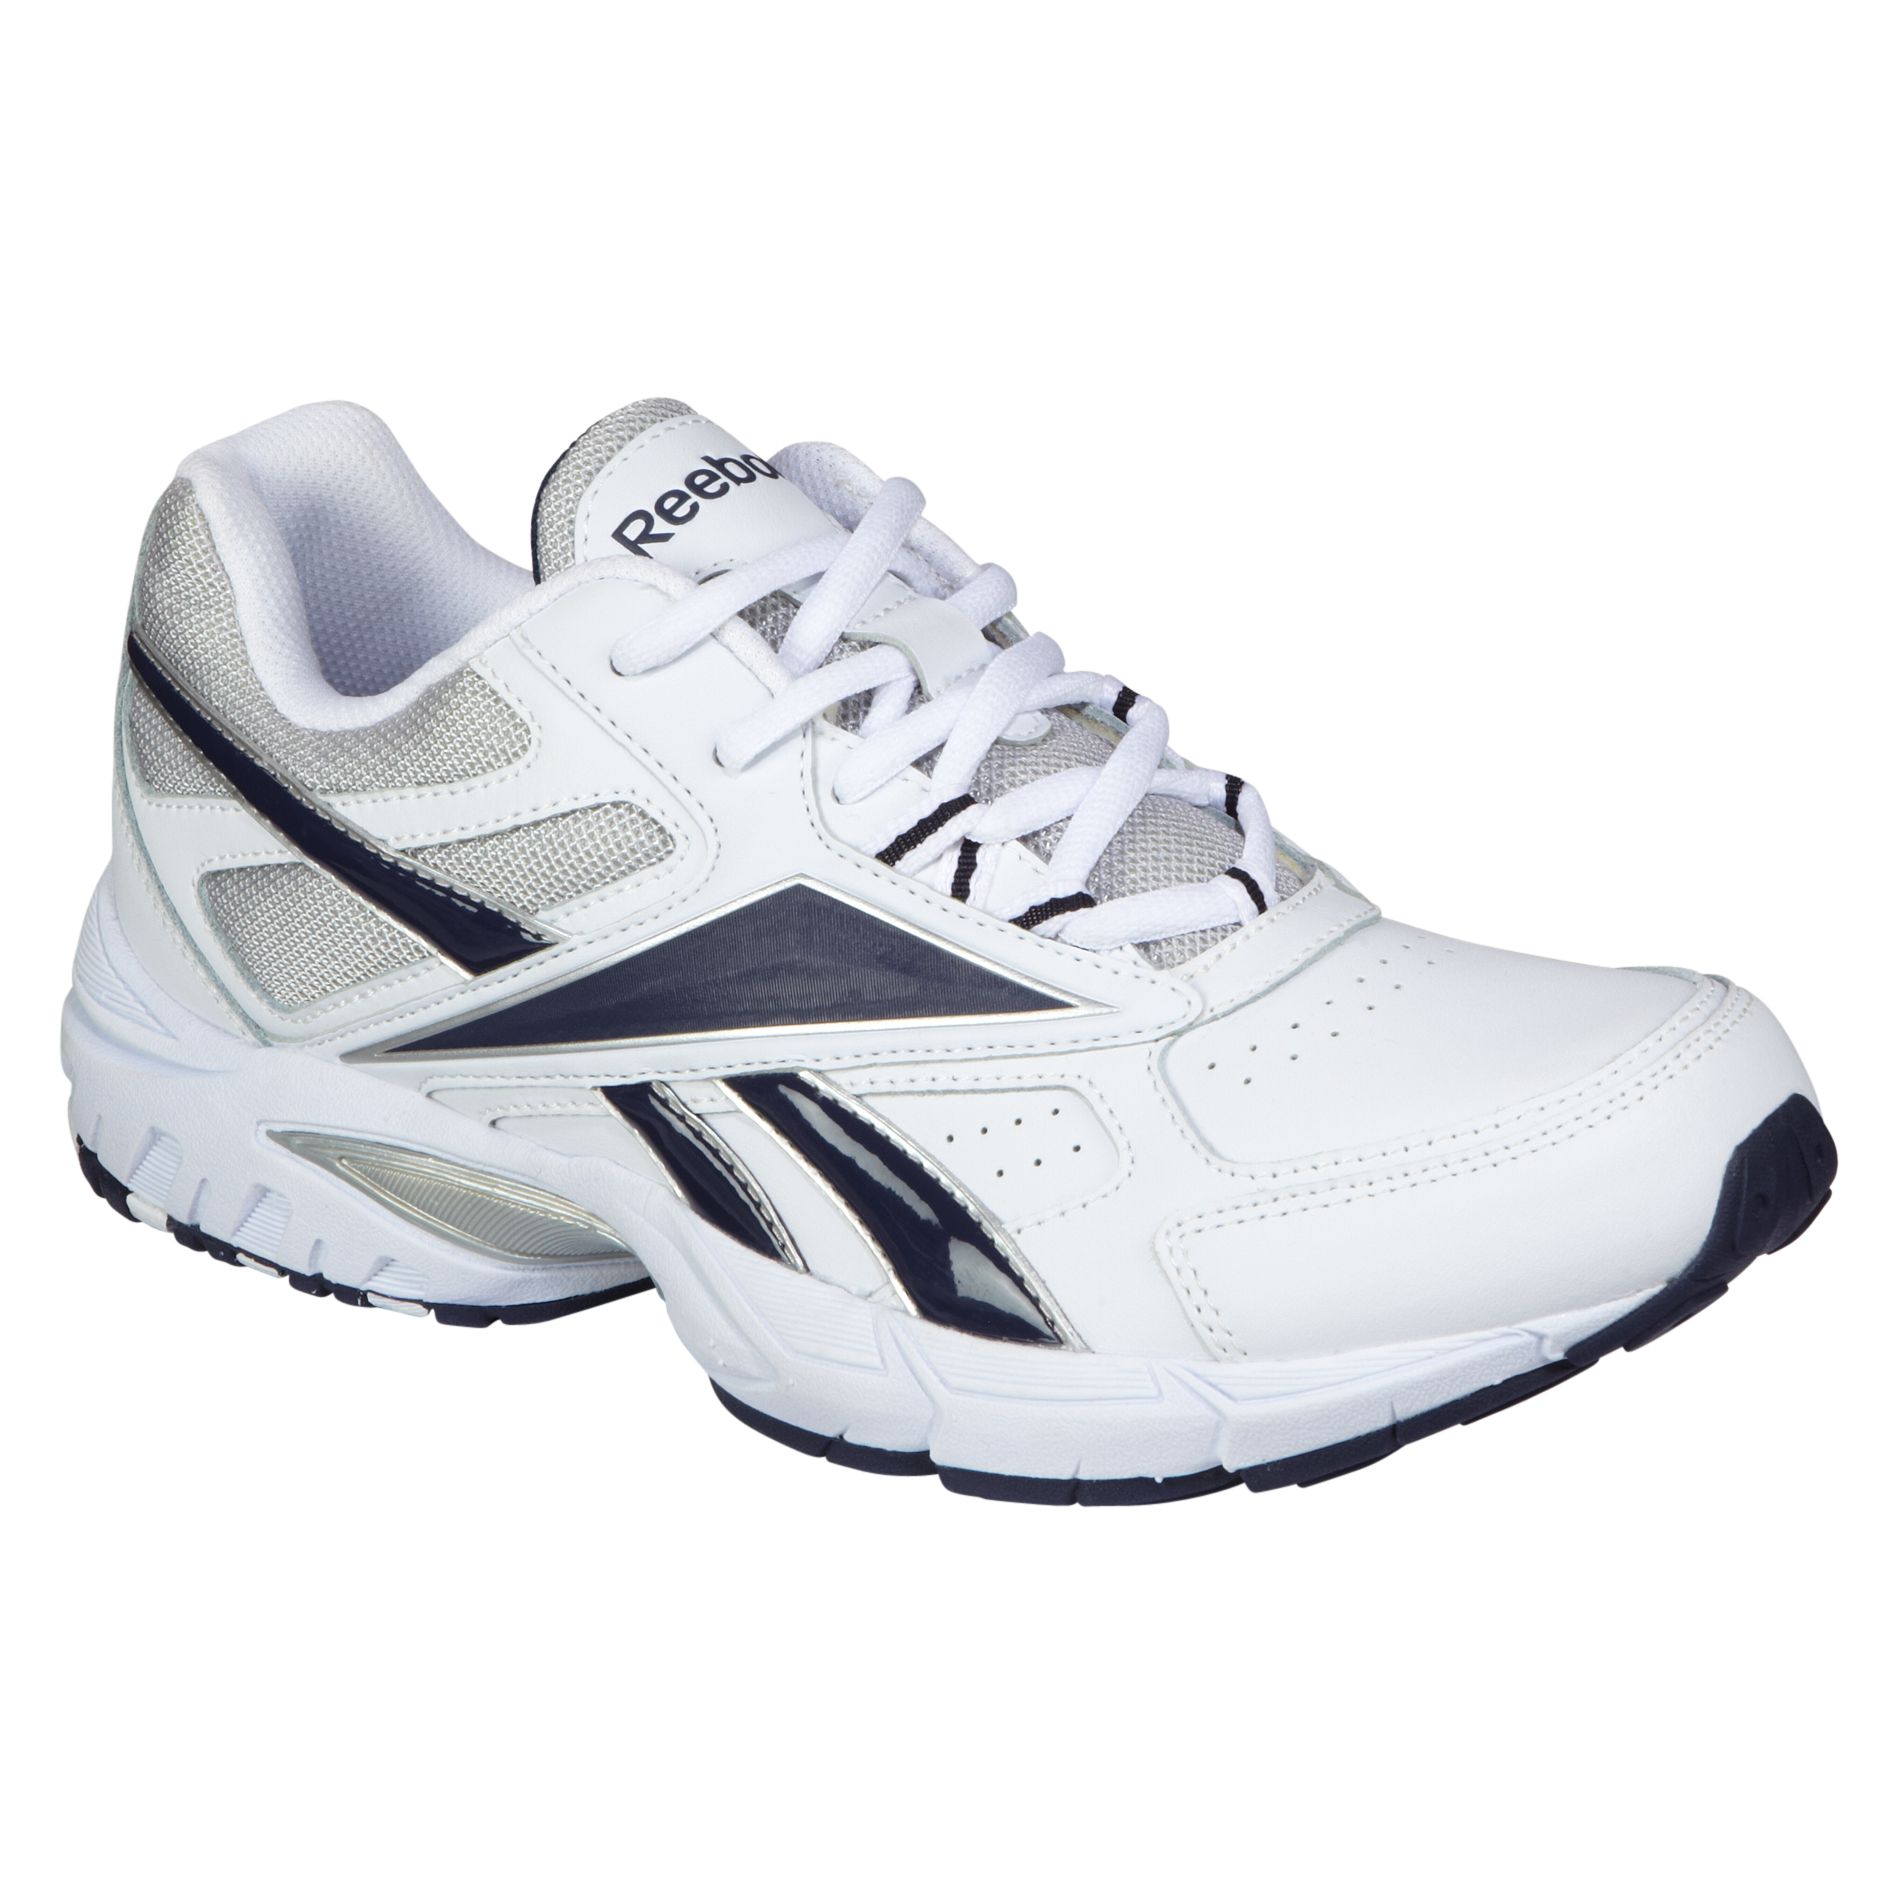 Reebok Men's Infrastructure Athletic Shoe - White